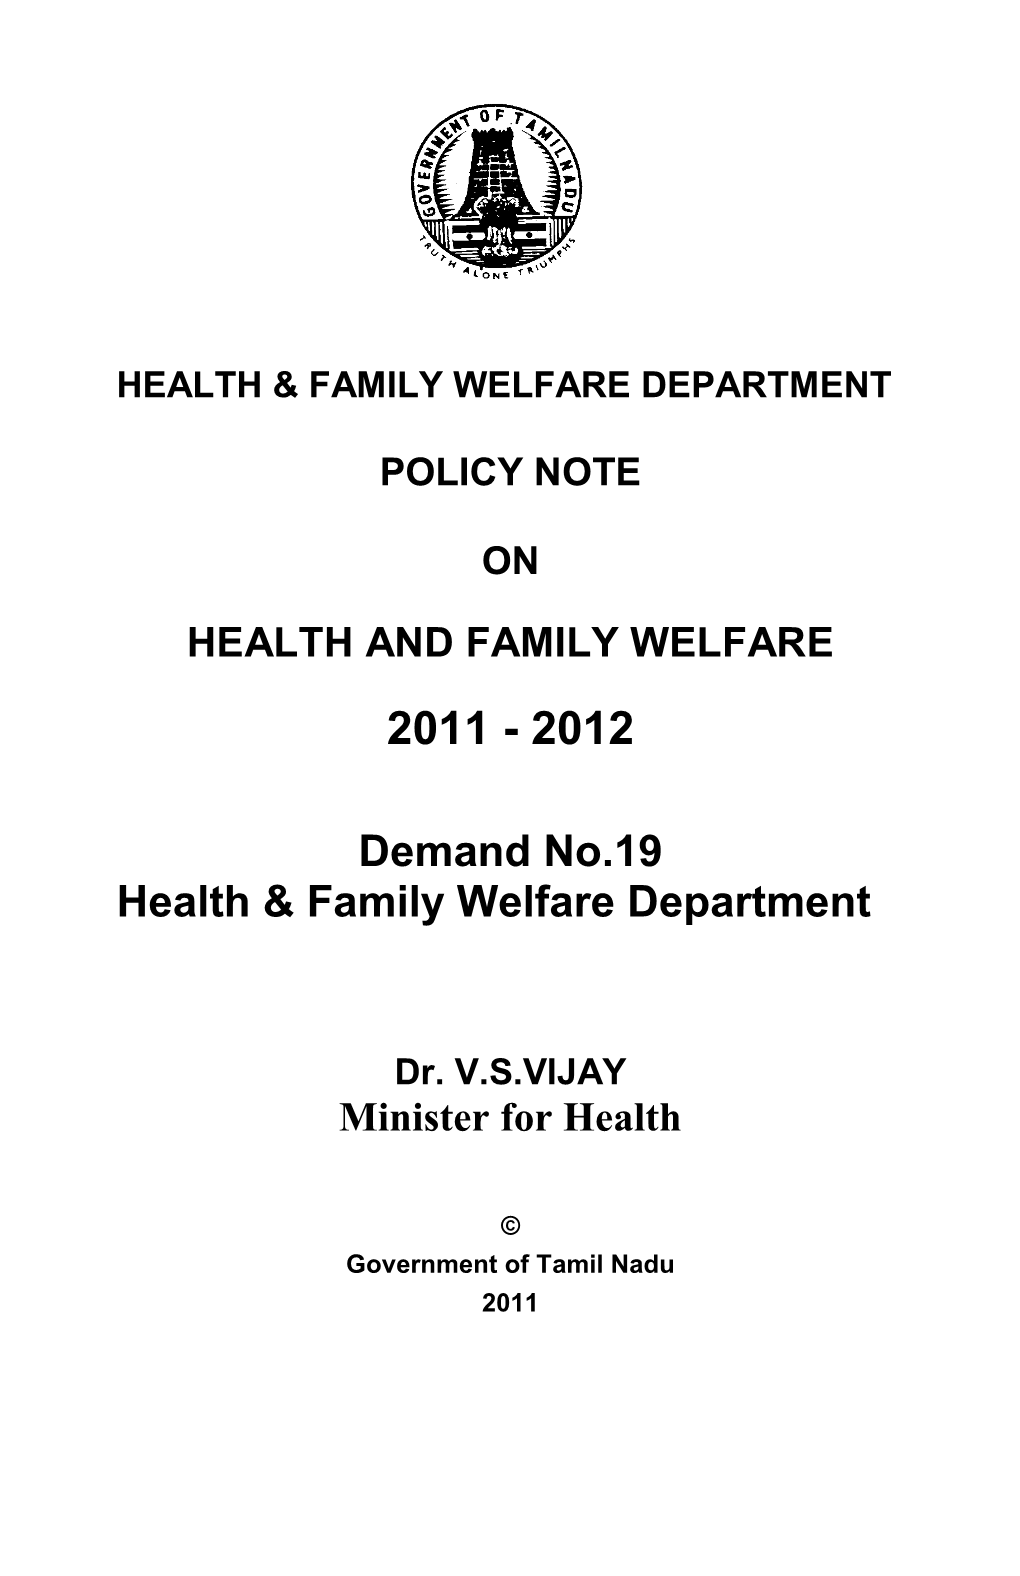 Demand No.19 Health & Family Welfare Department